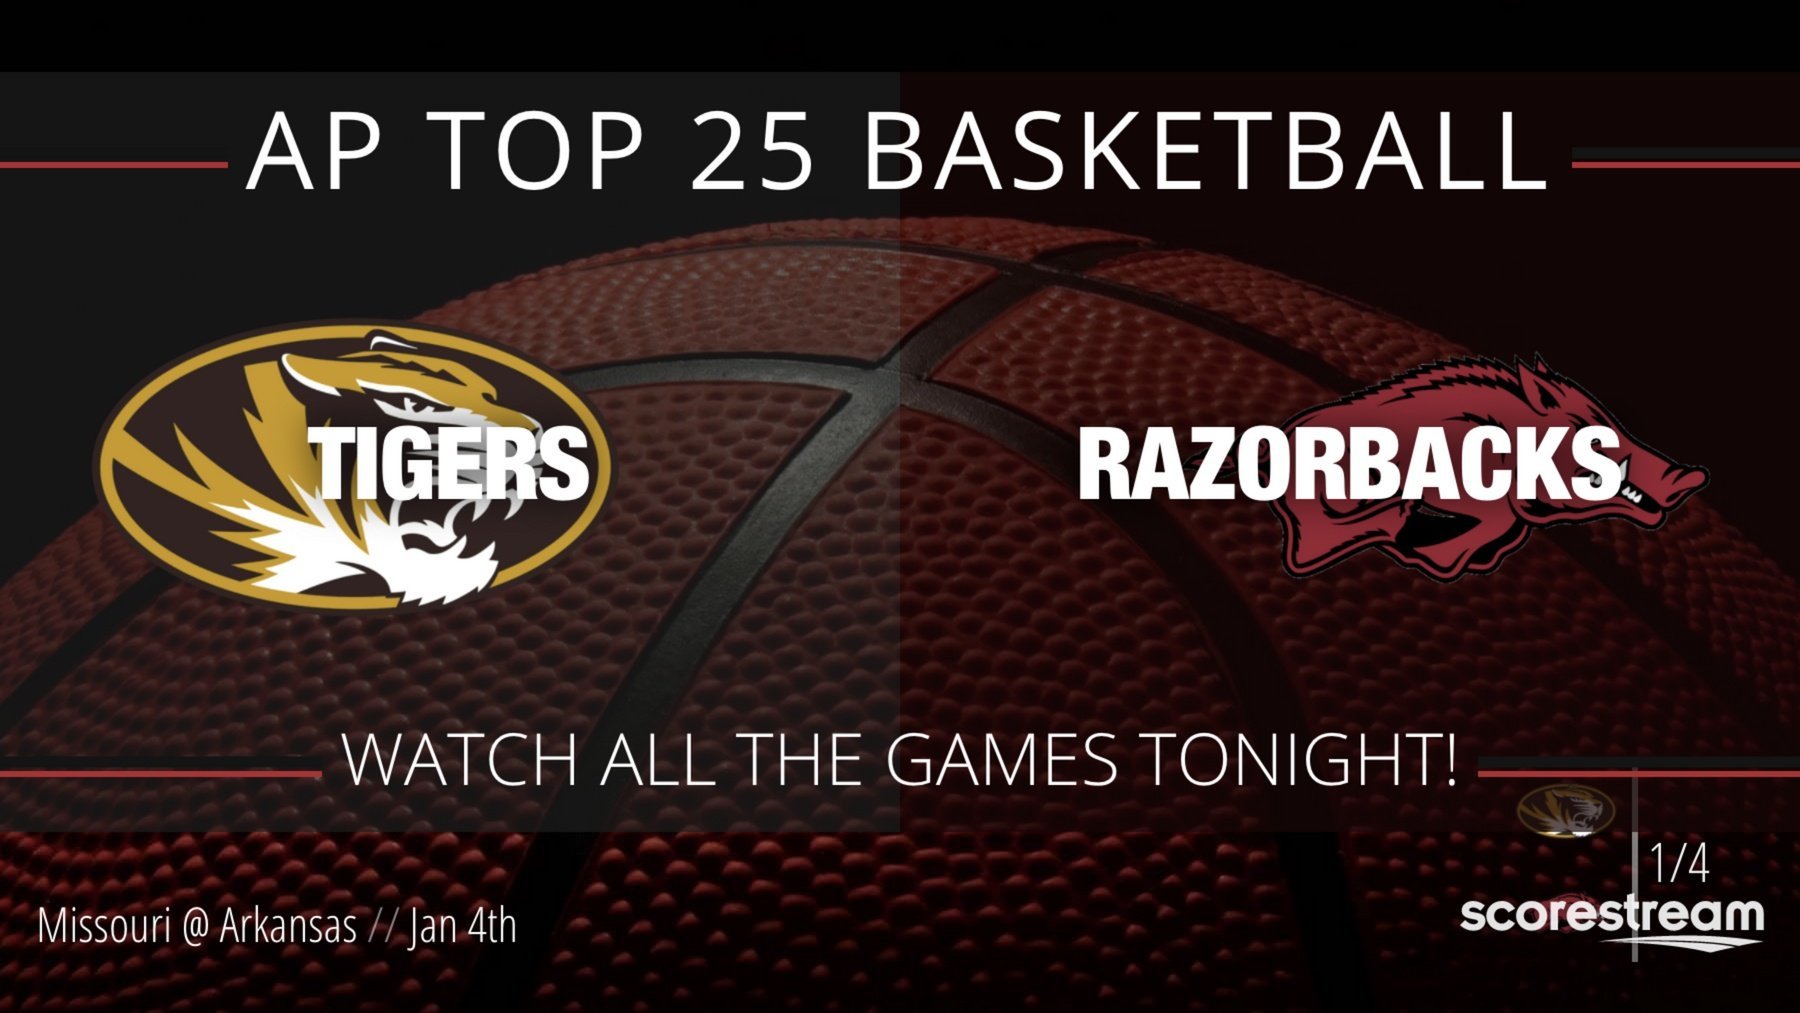 Watch AP Top 25 basketball schedule tonight